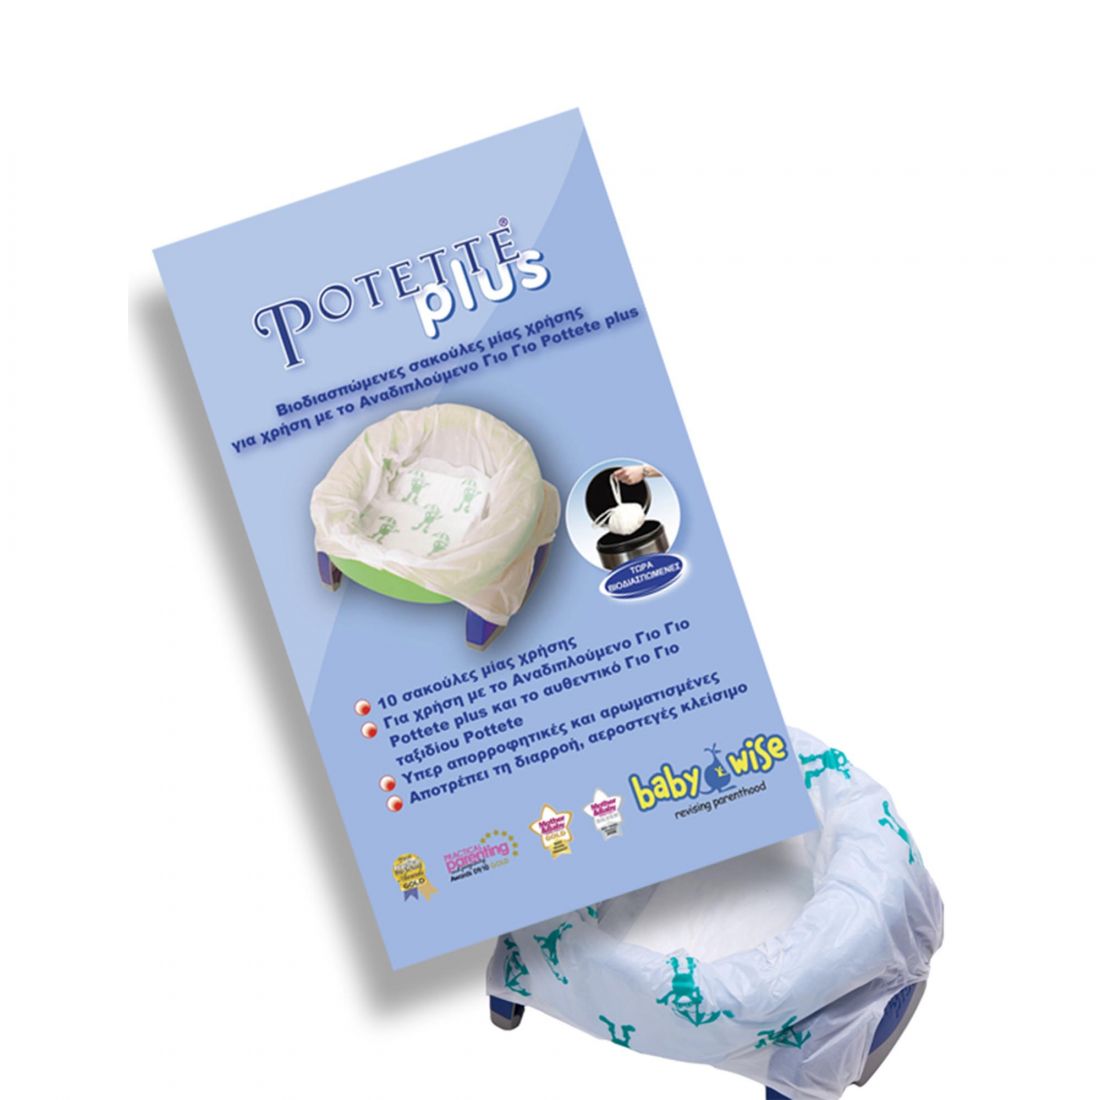 Potette Plus Σακούλες Αναπλήρωσης Βιοδιασπώμενες (Σετ 10 τμχ) Babywise